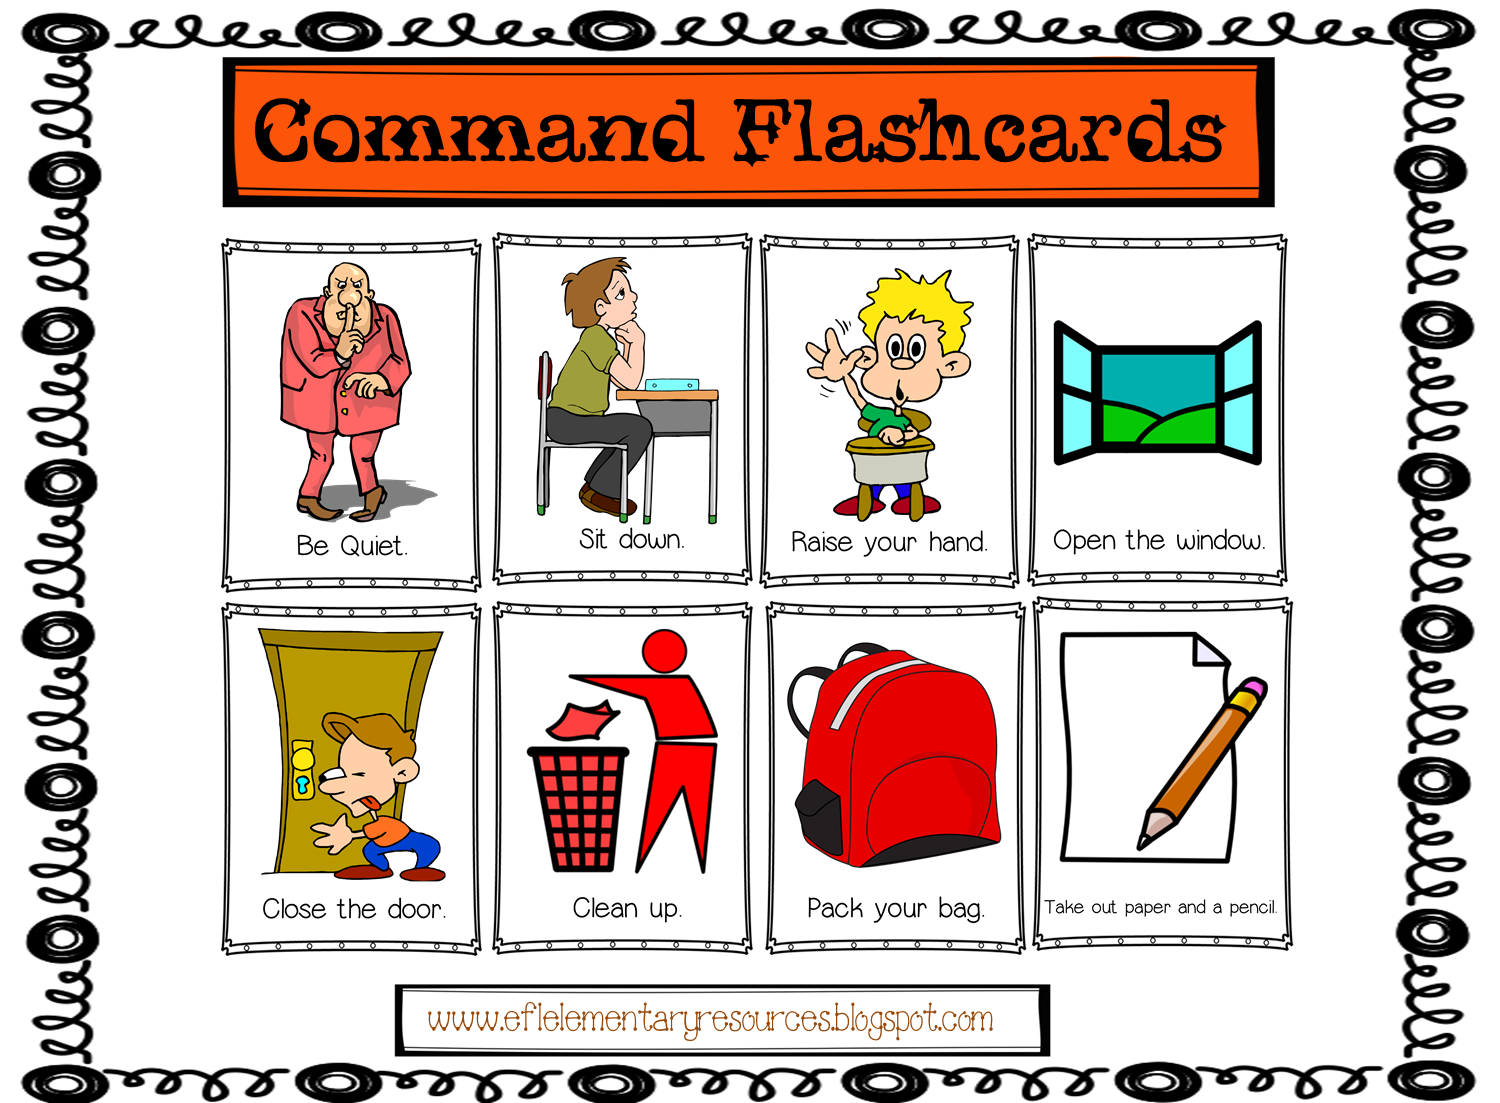 Efl elementary teachers commands. English clipart classroom board